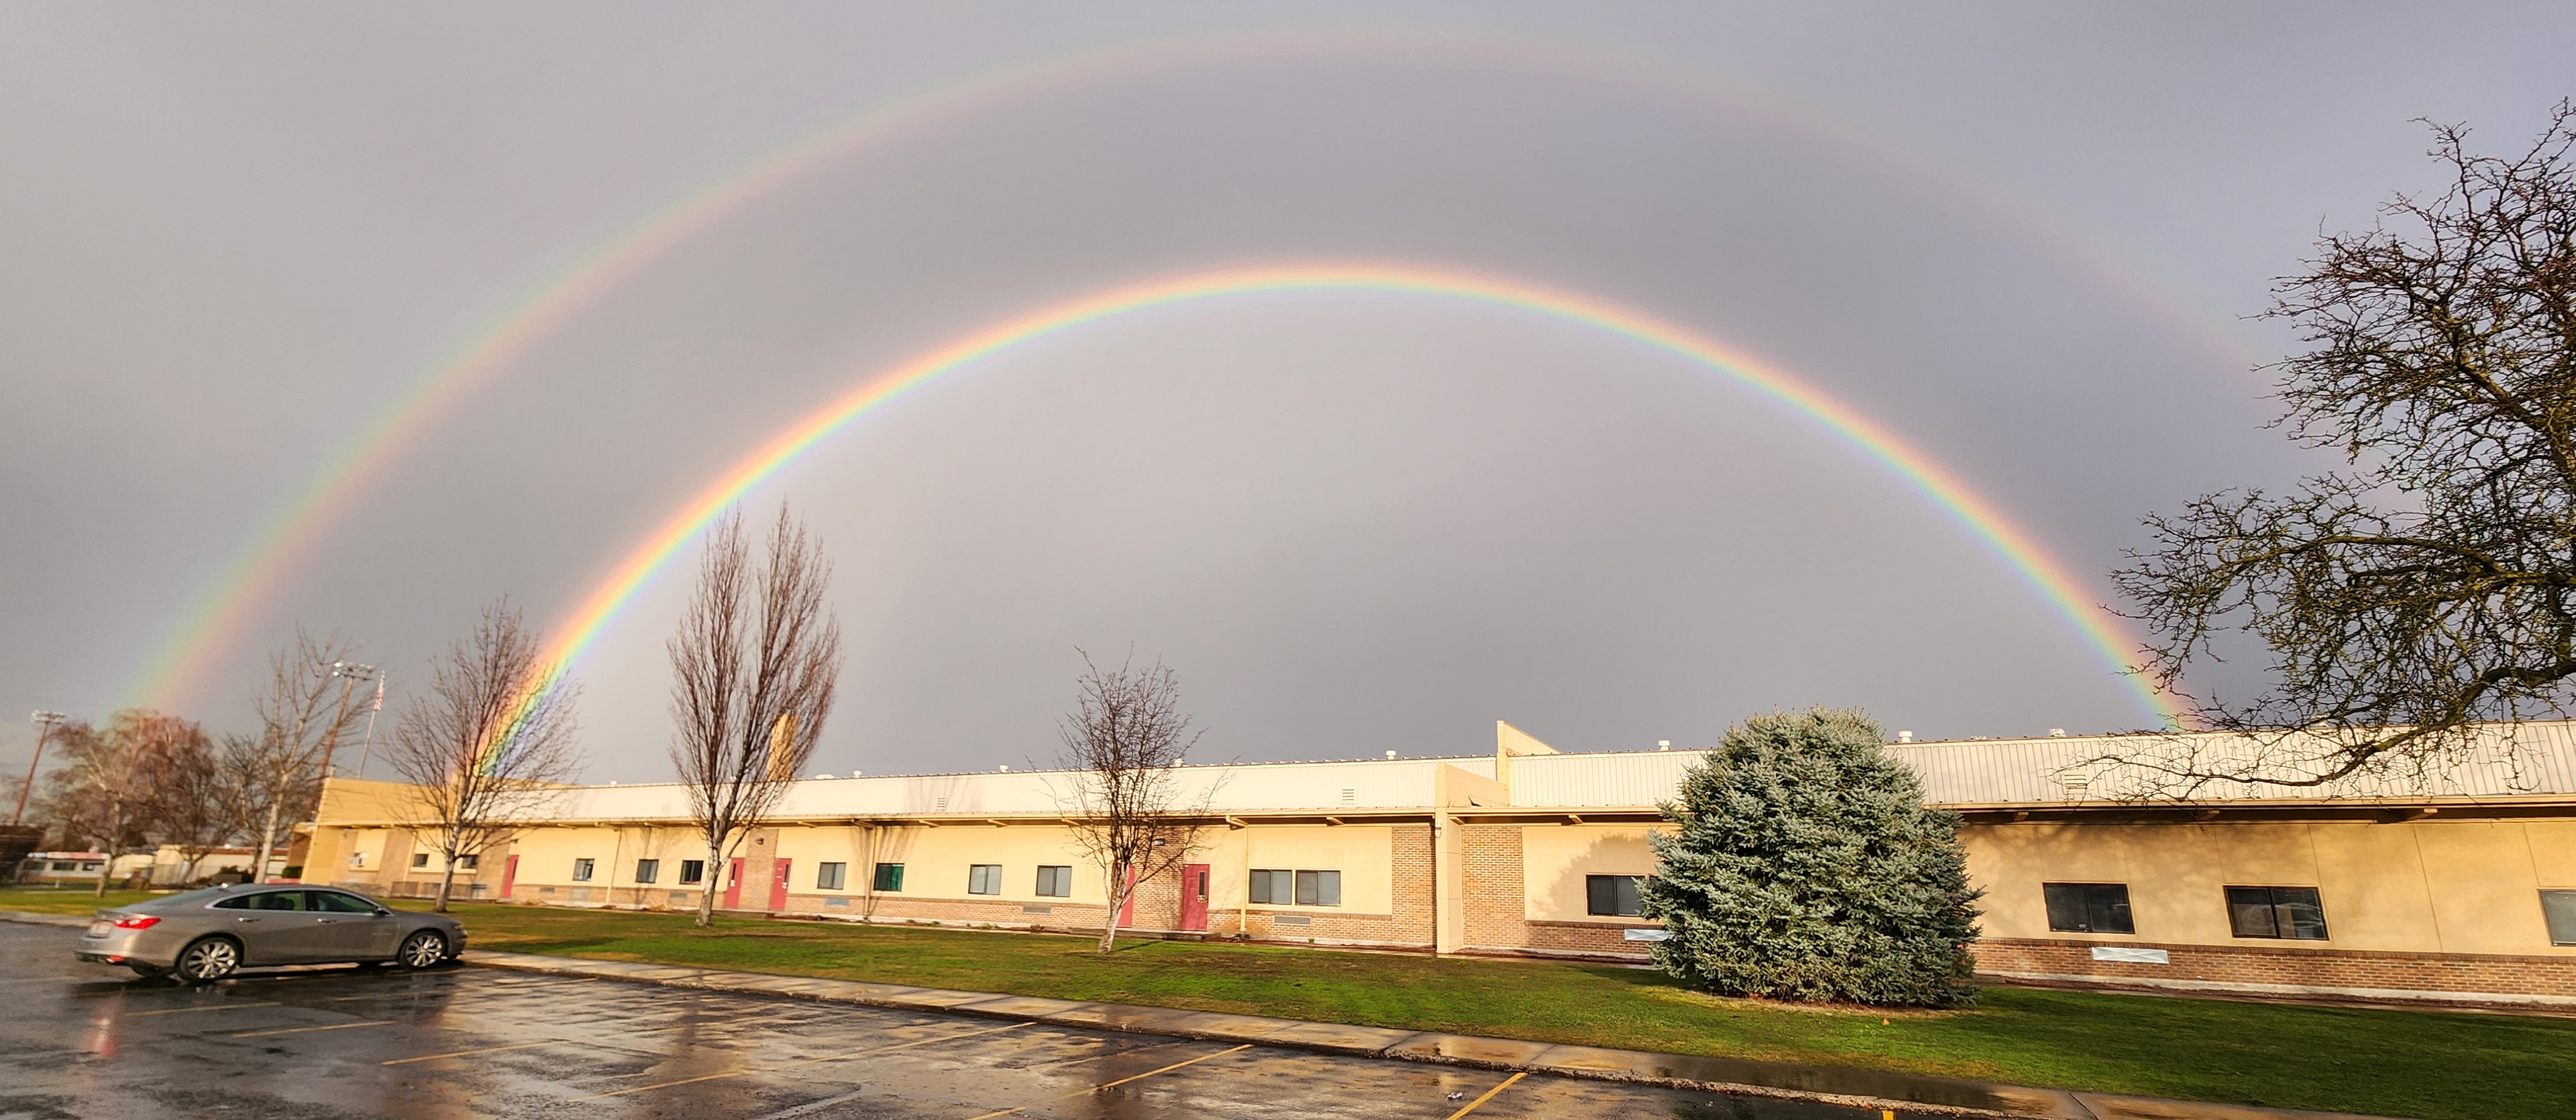 Double rainbow over Parkway Elementary